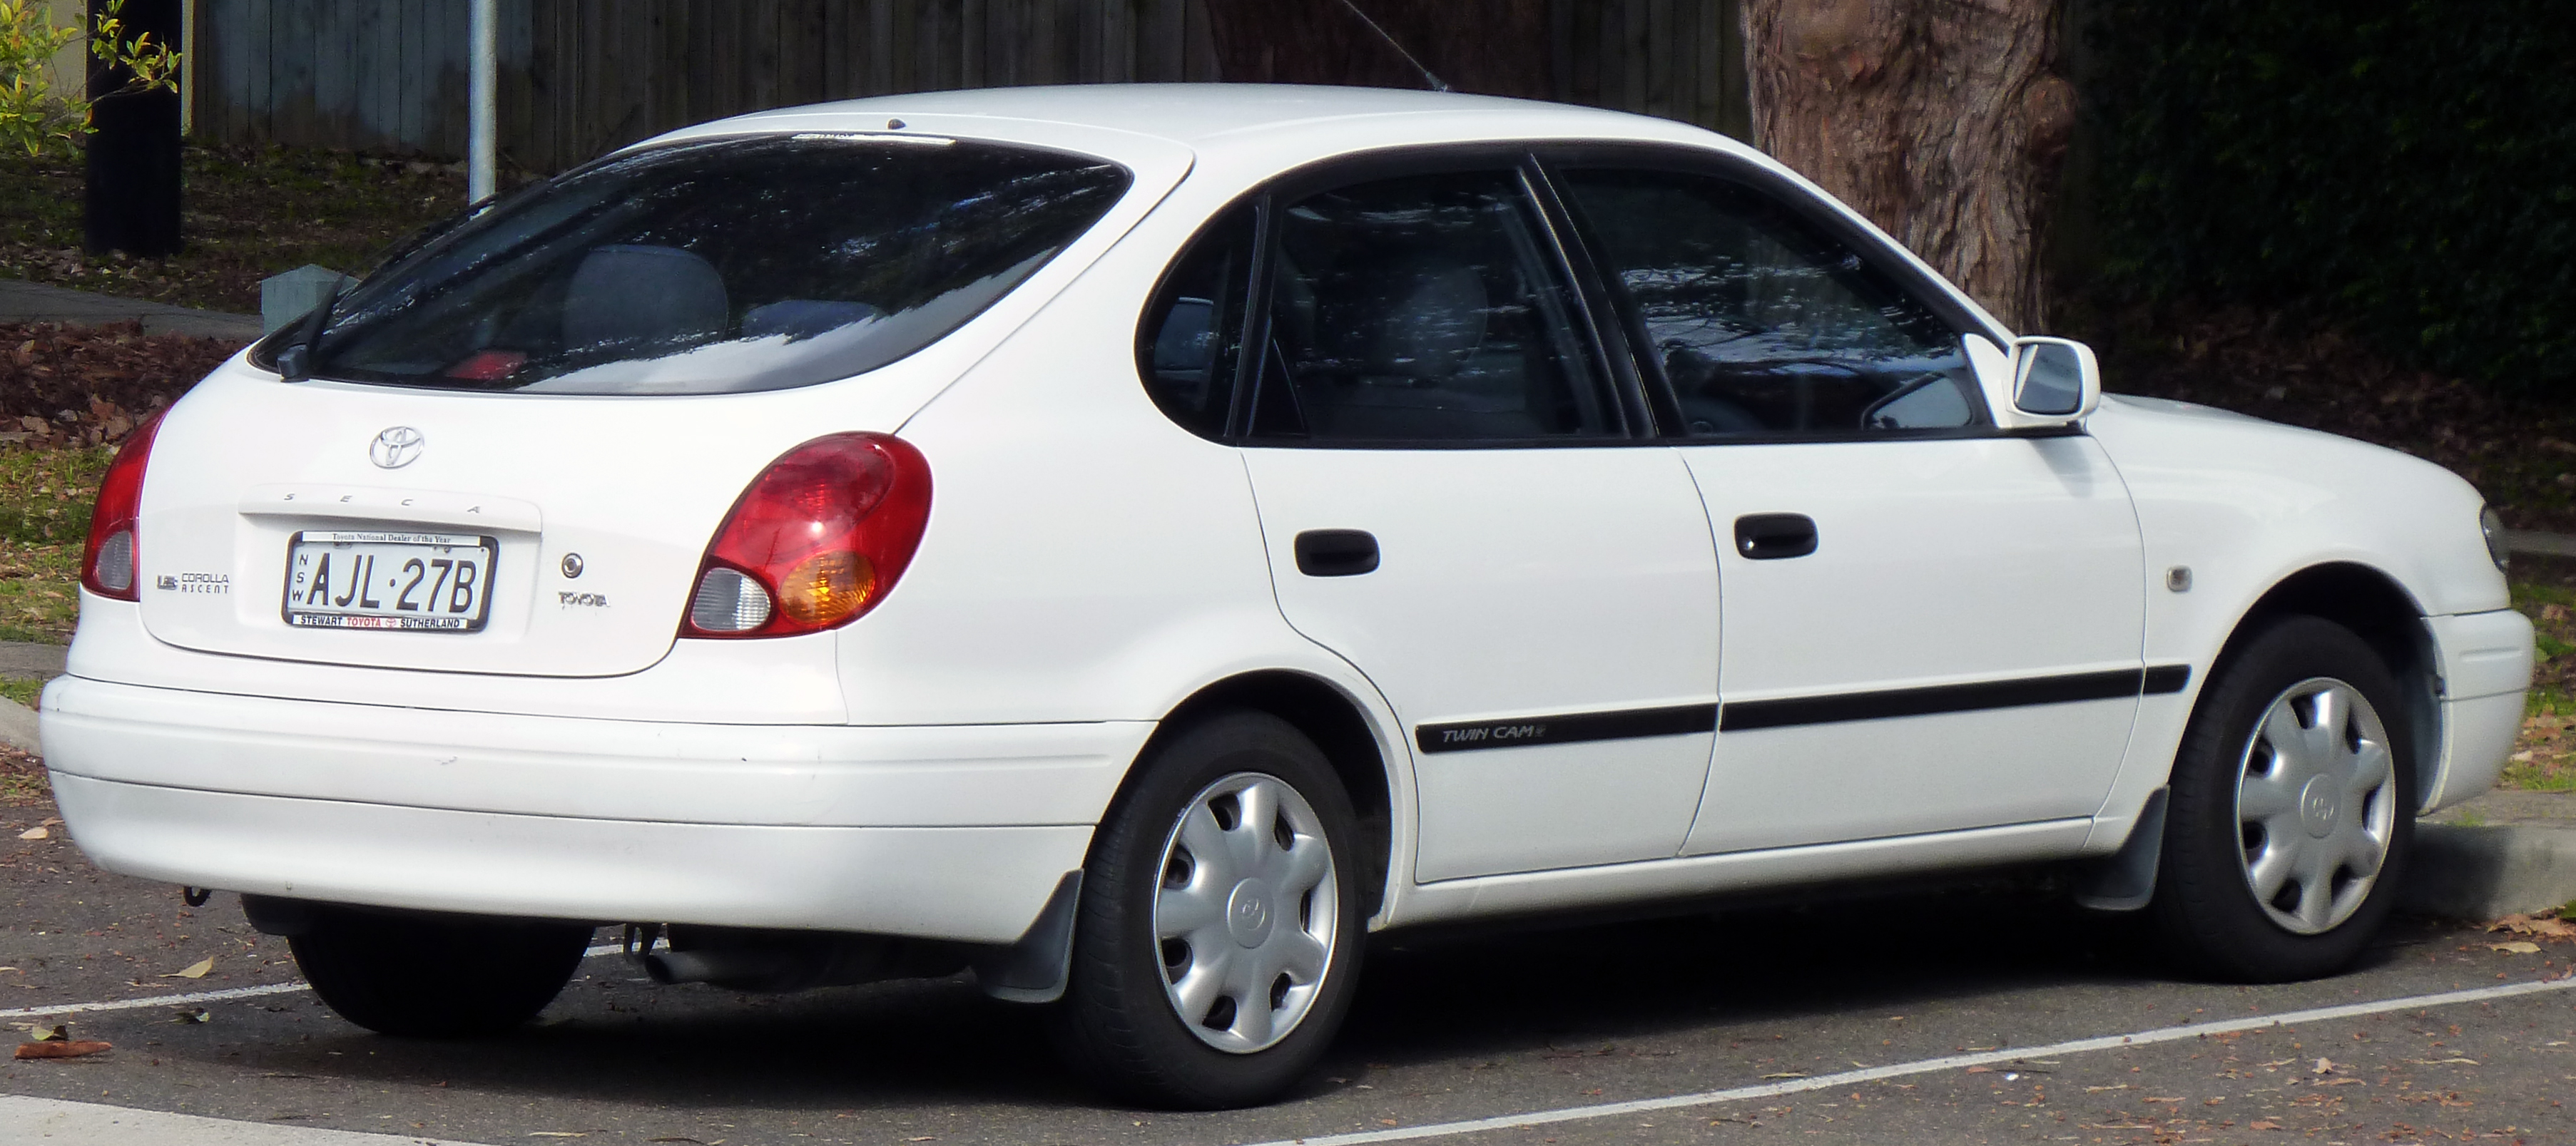 Toyota Corolla 2001 #3